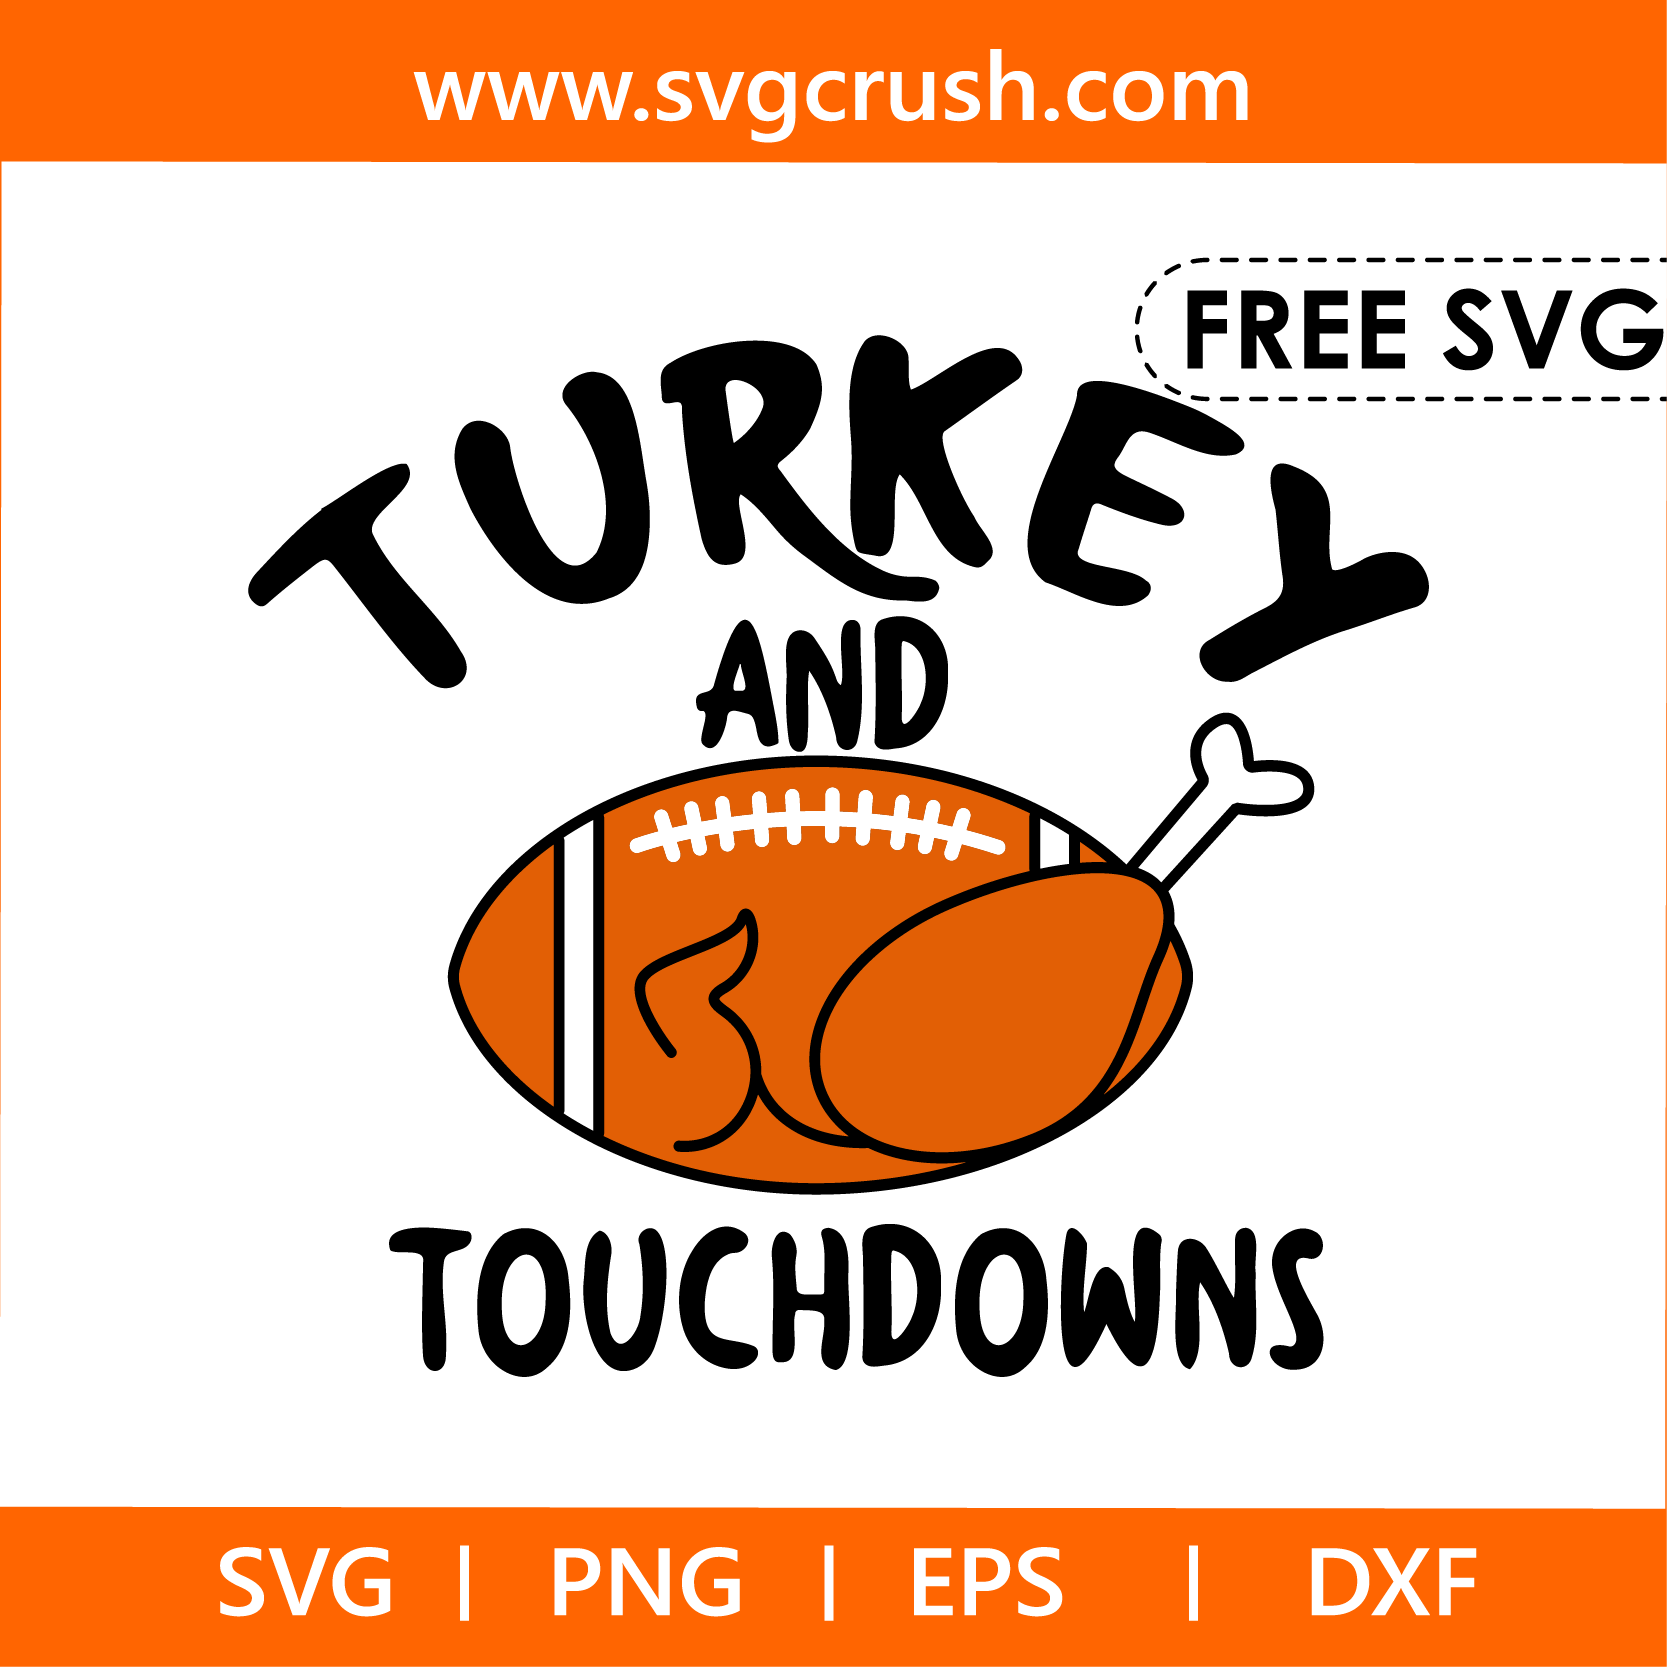 free turkey-and-touchdowns-003 svg